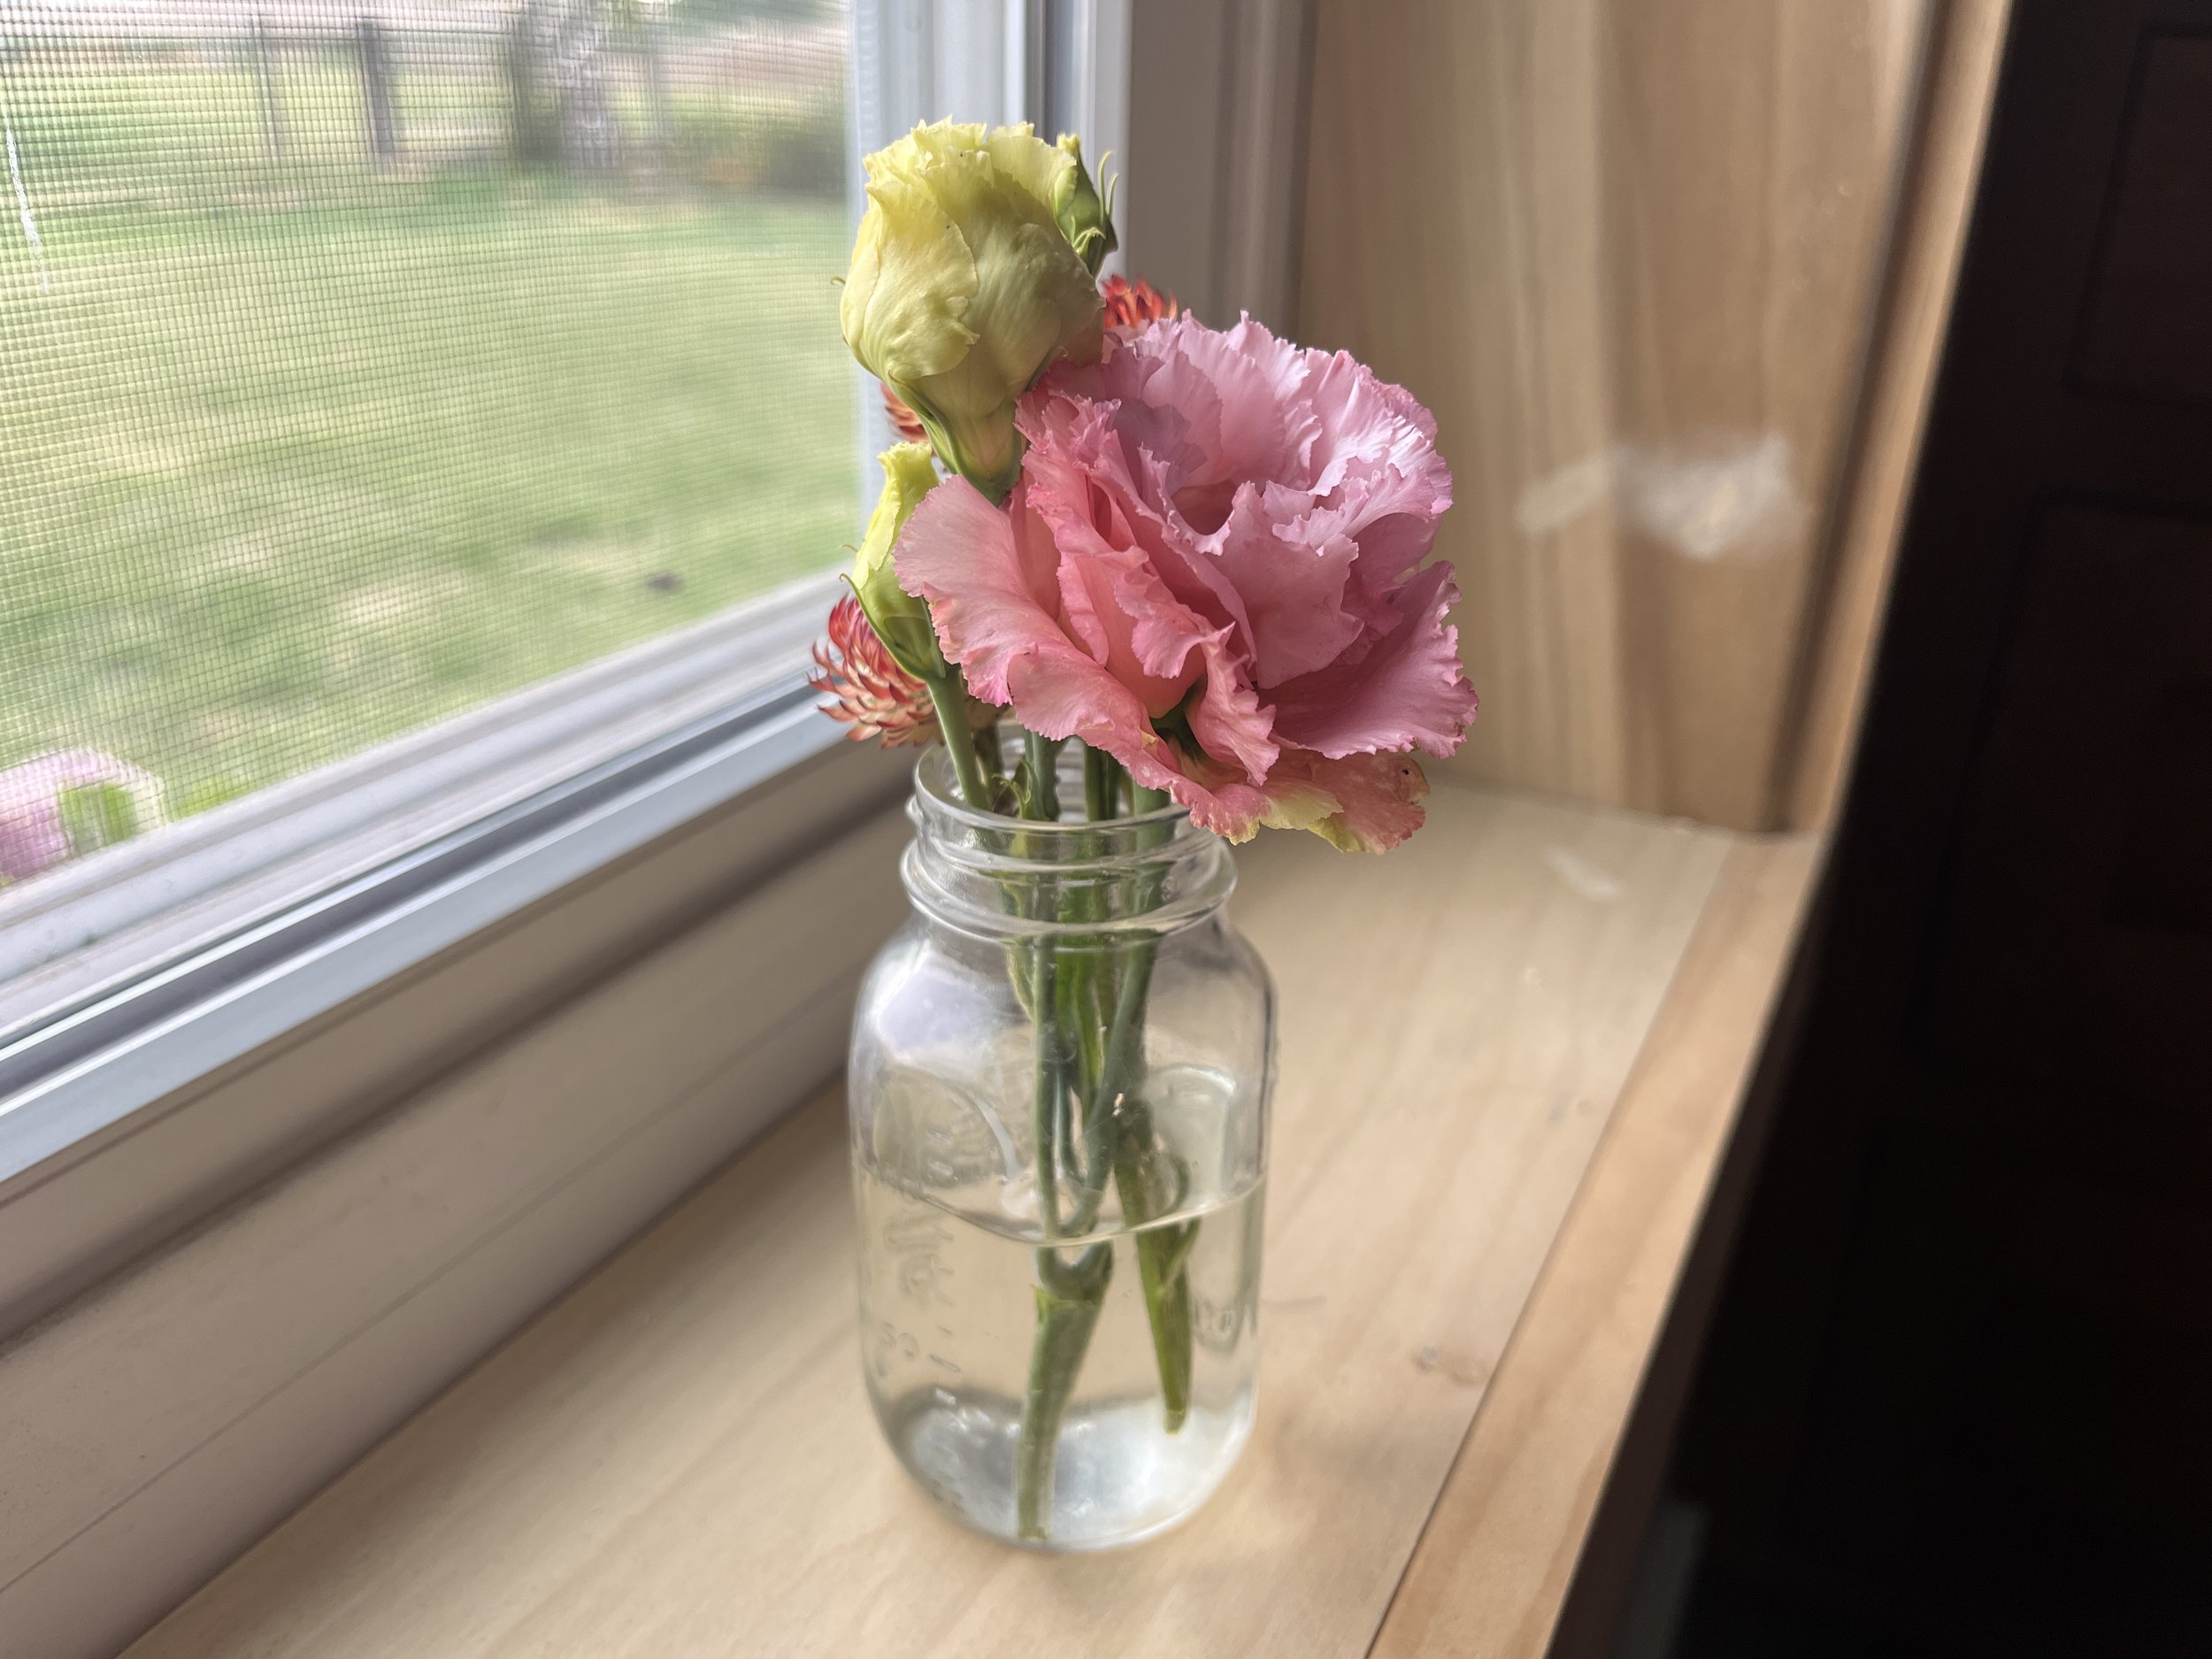 flowers in a bud vase on a window sill